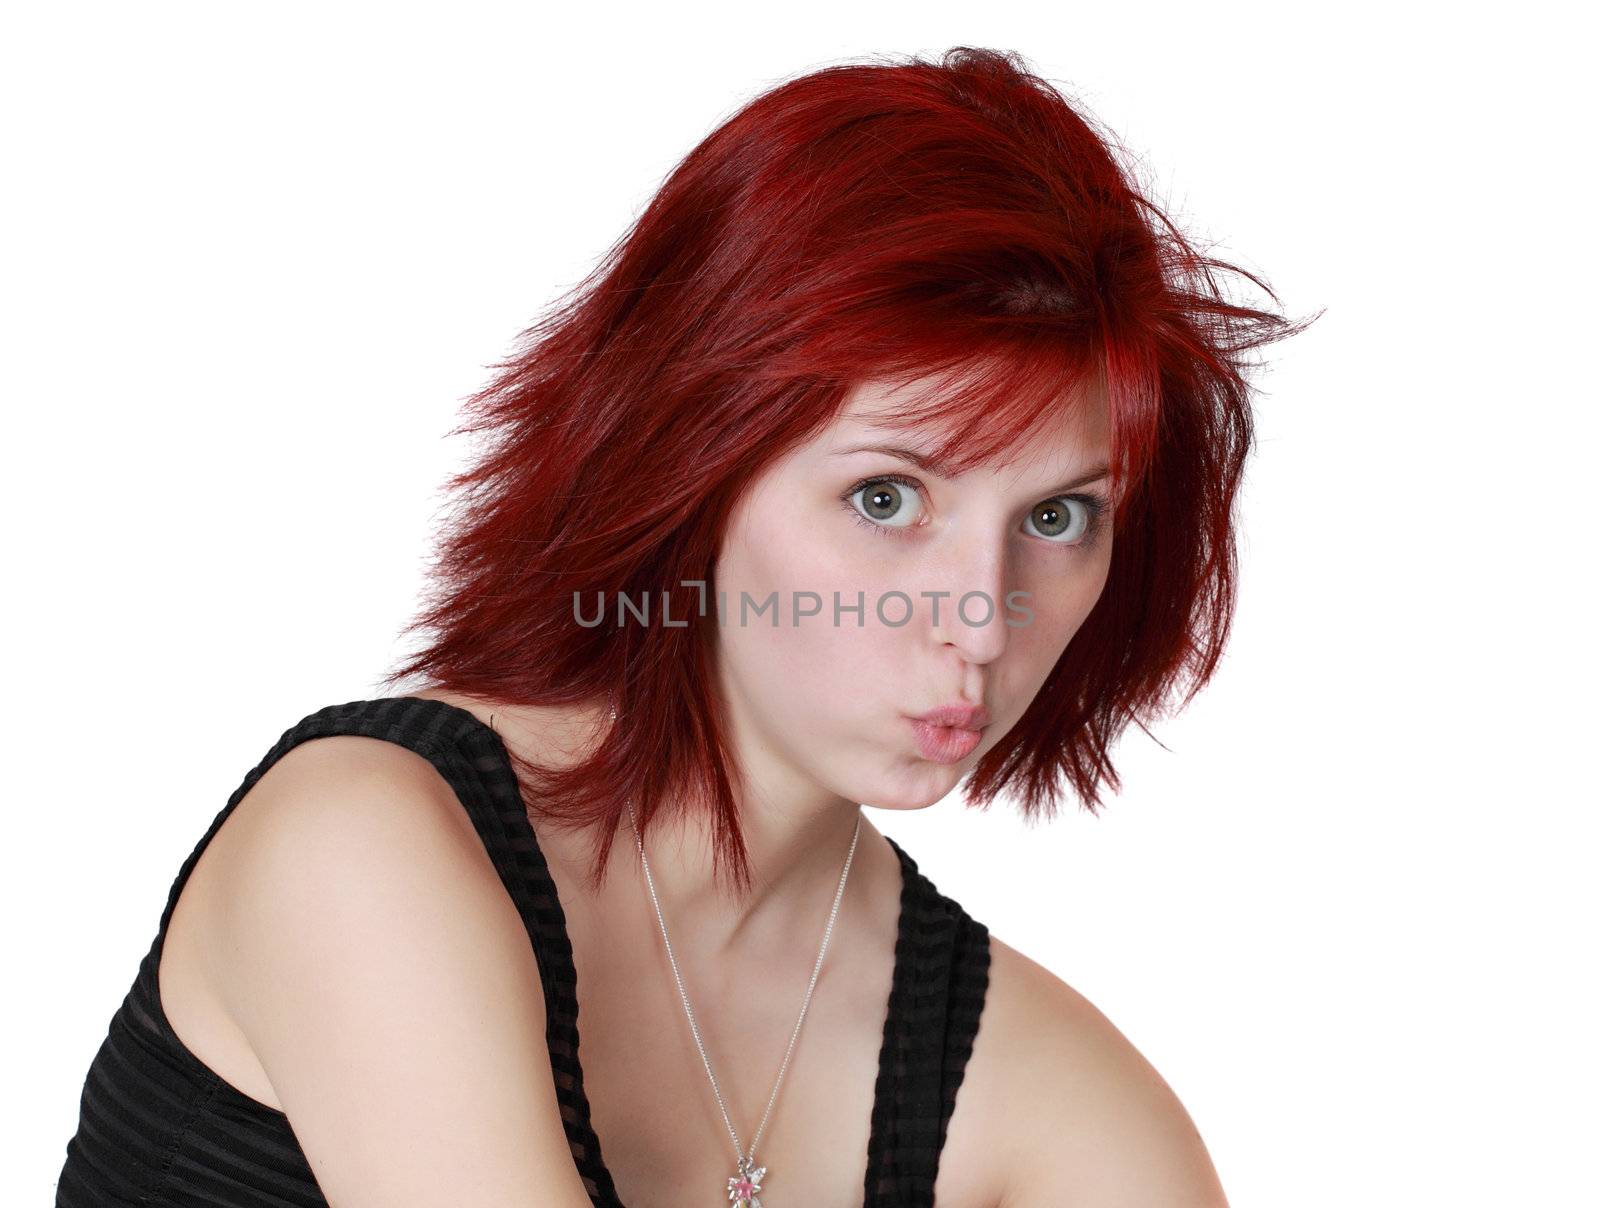 cute caucasian red hair girl